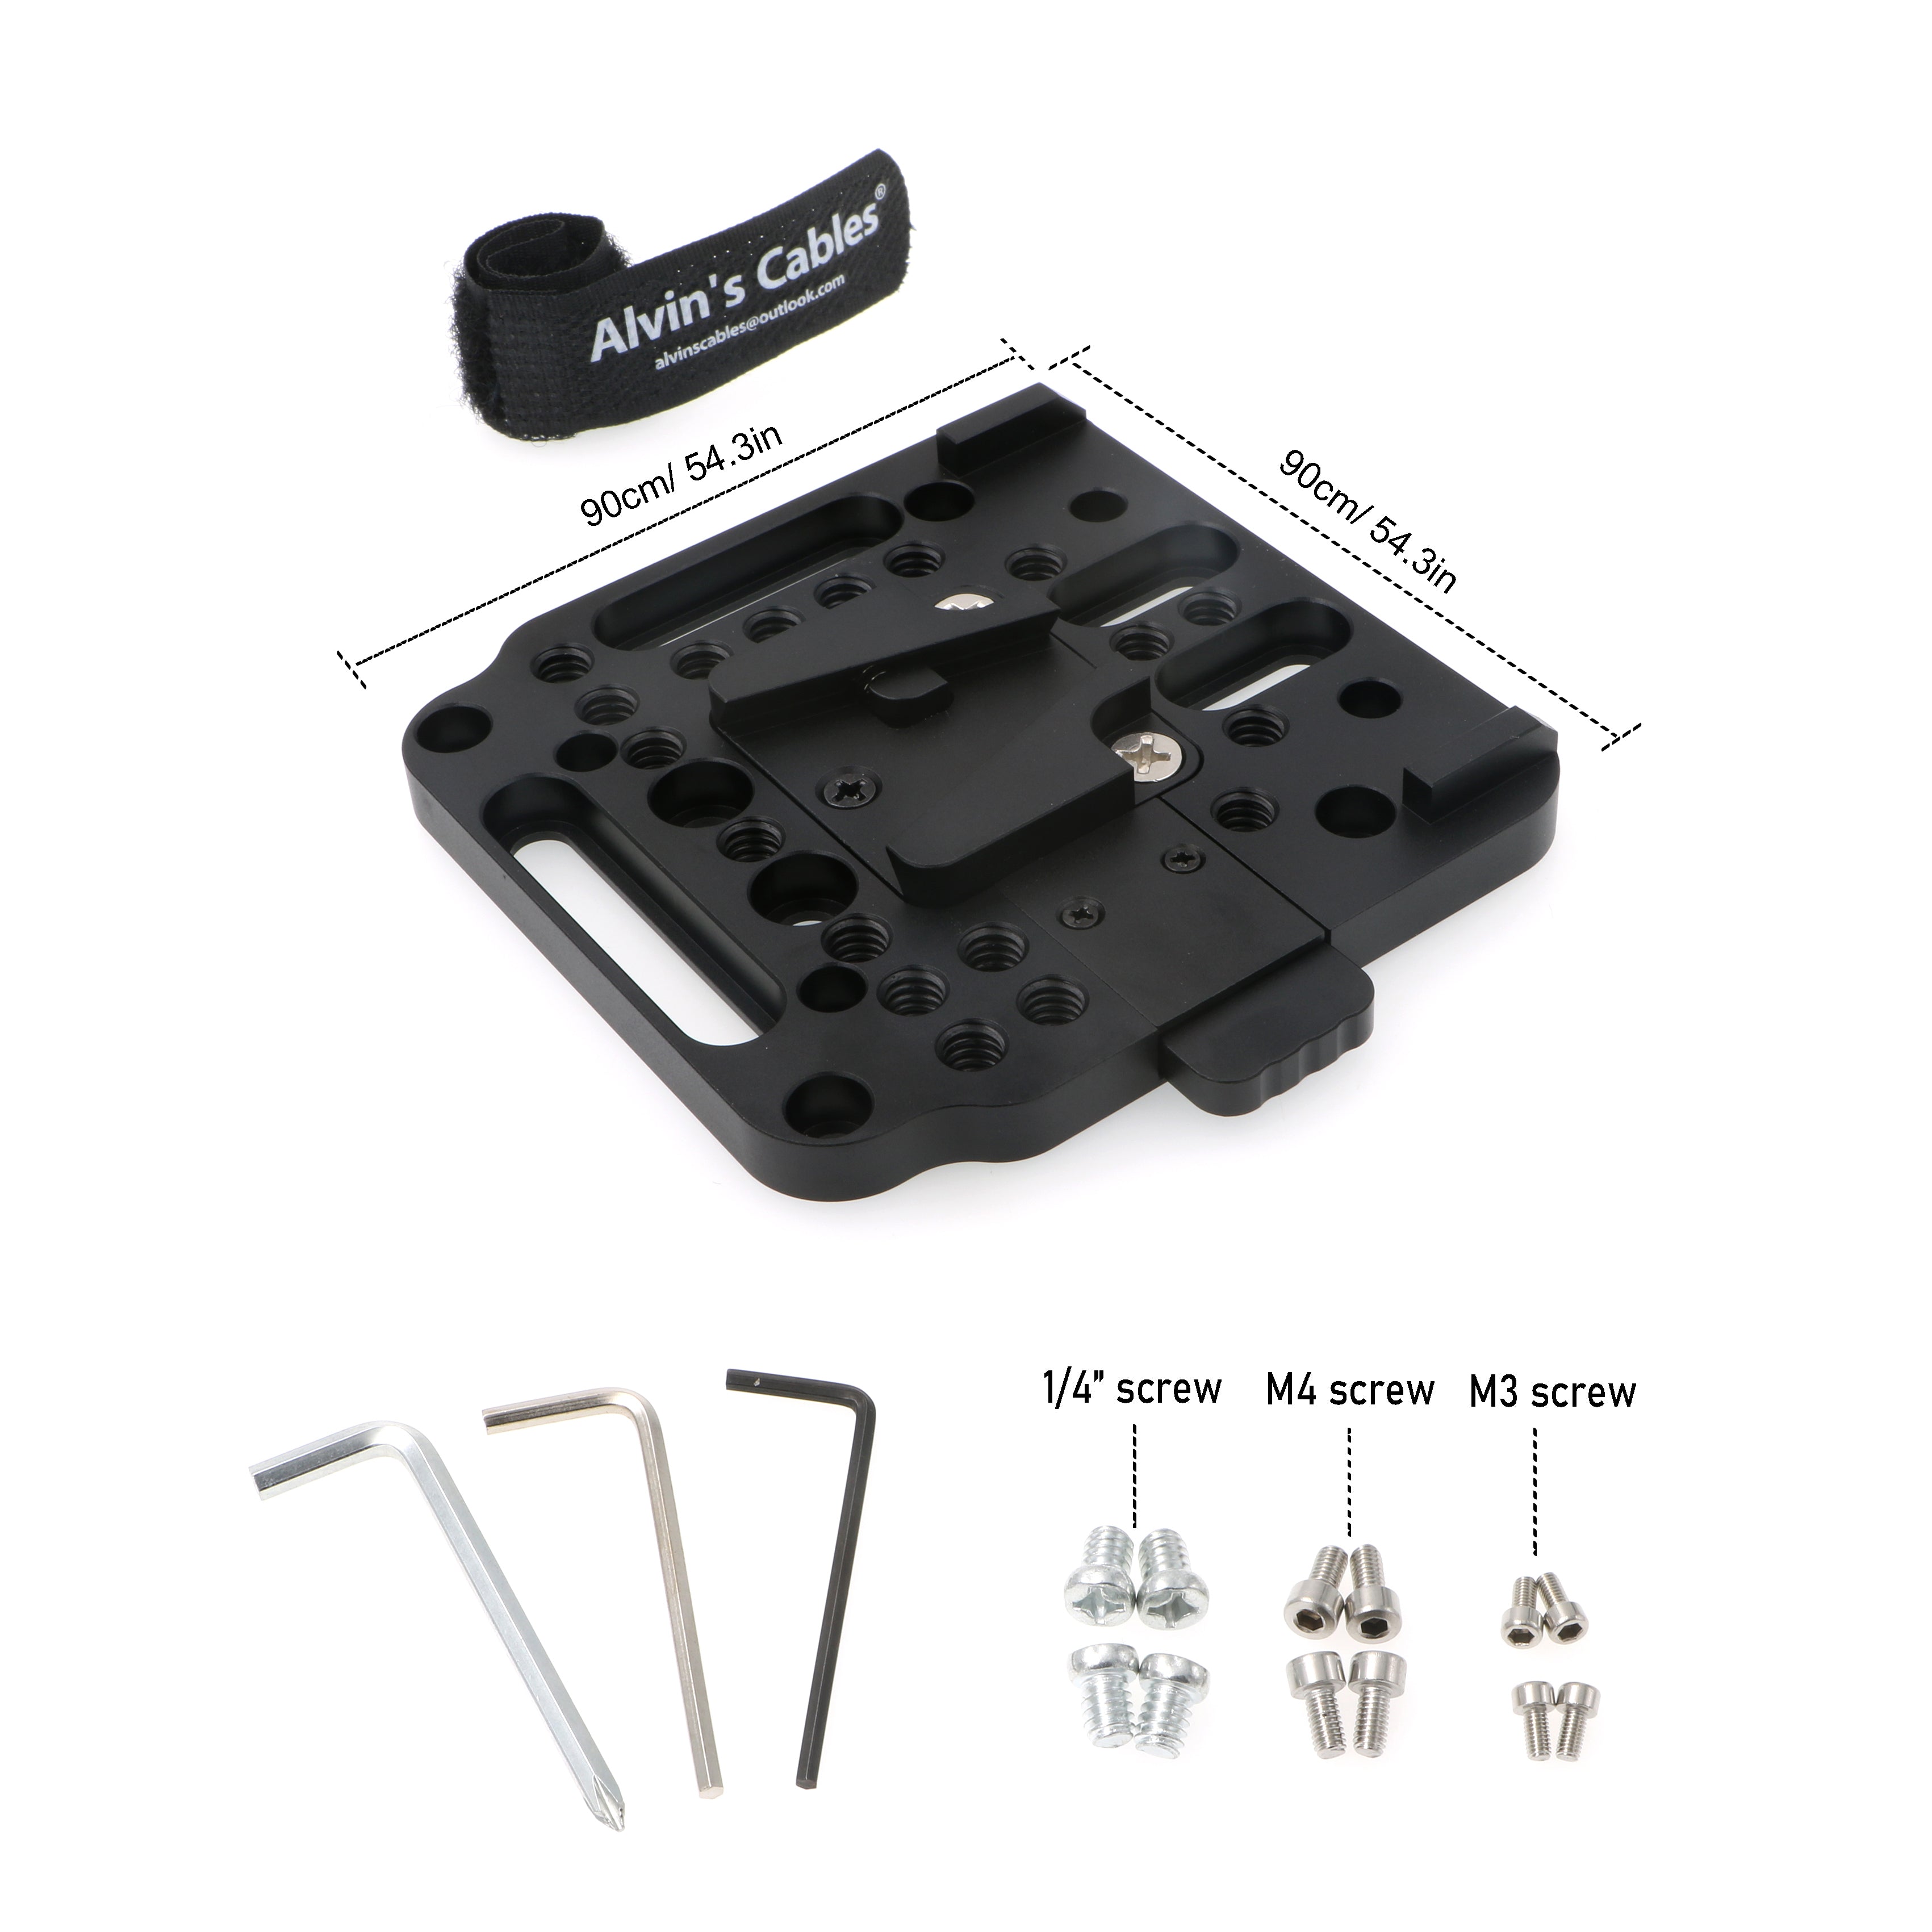 V-Lock Assembly-Kit with Female-V-Dock Male-V-Lock Quick-Release-Plate for V-Mount-Battery Alvin’s Cables